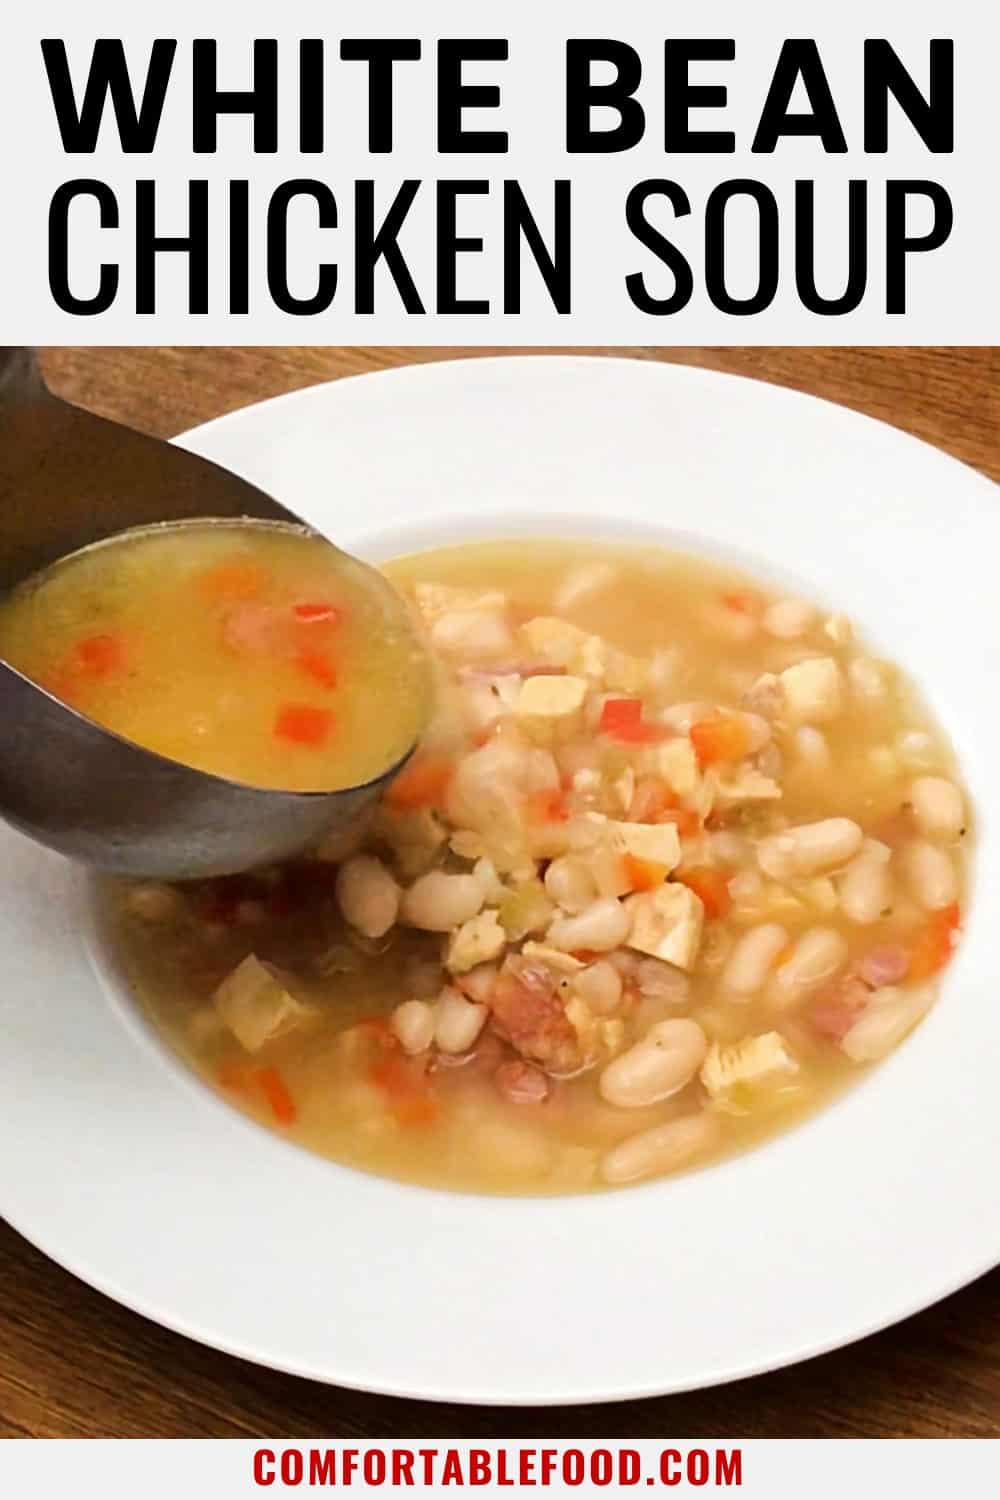 White bean chicken soup